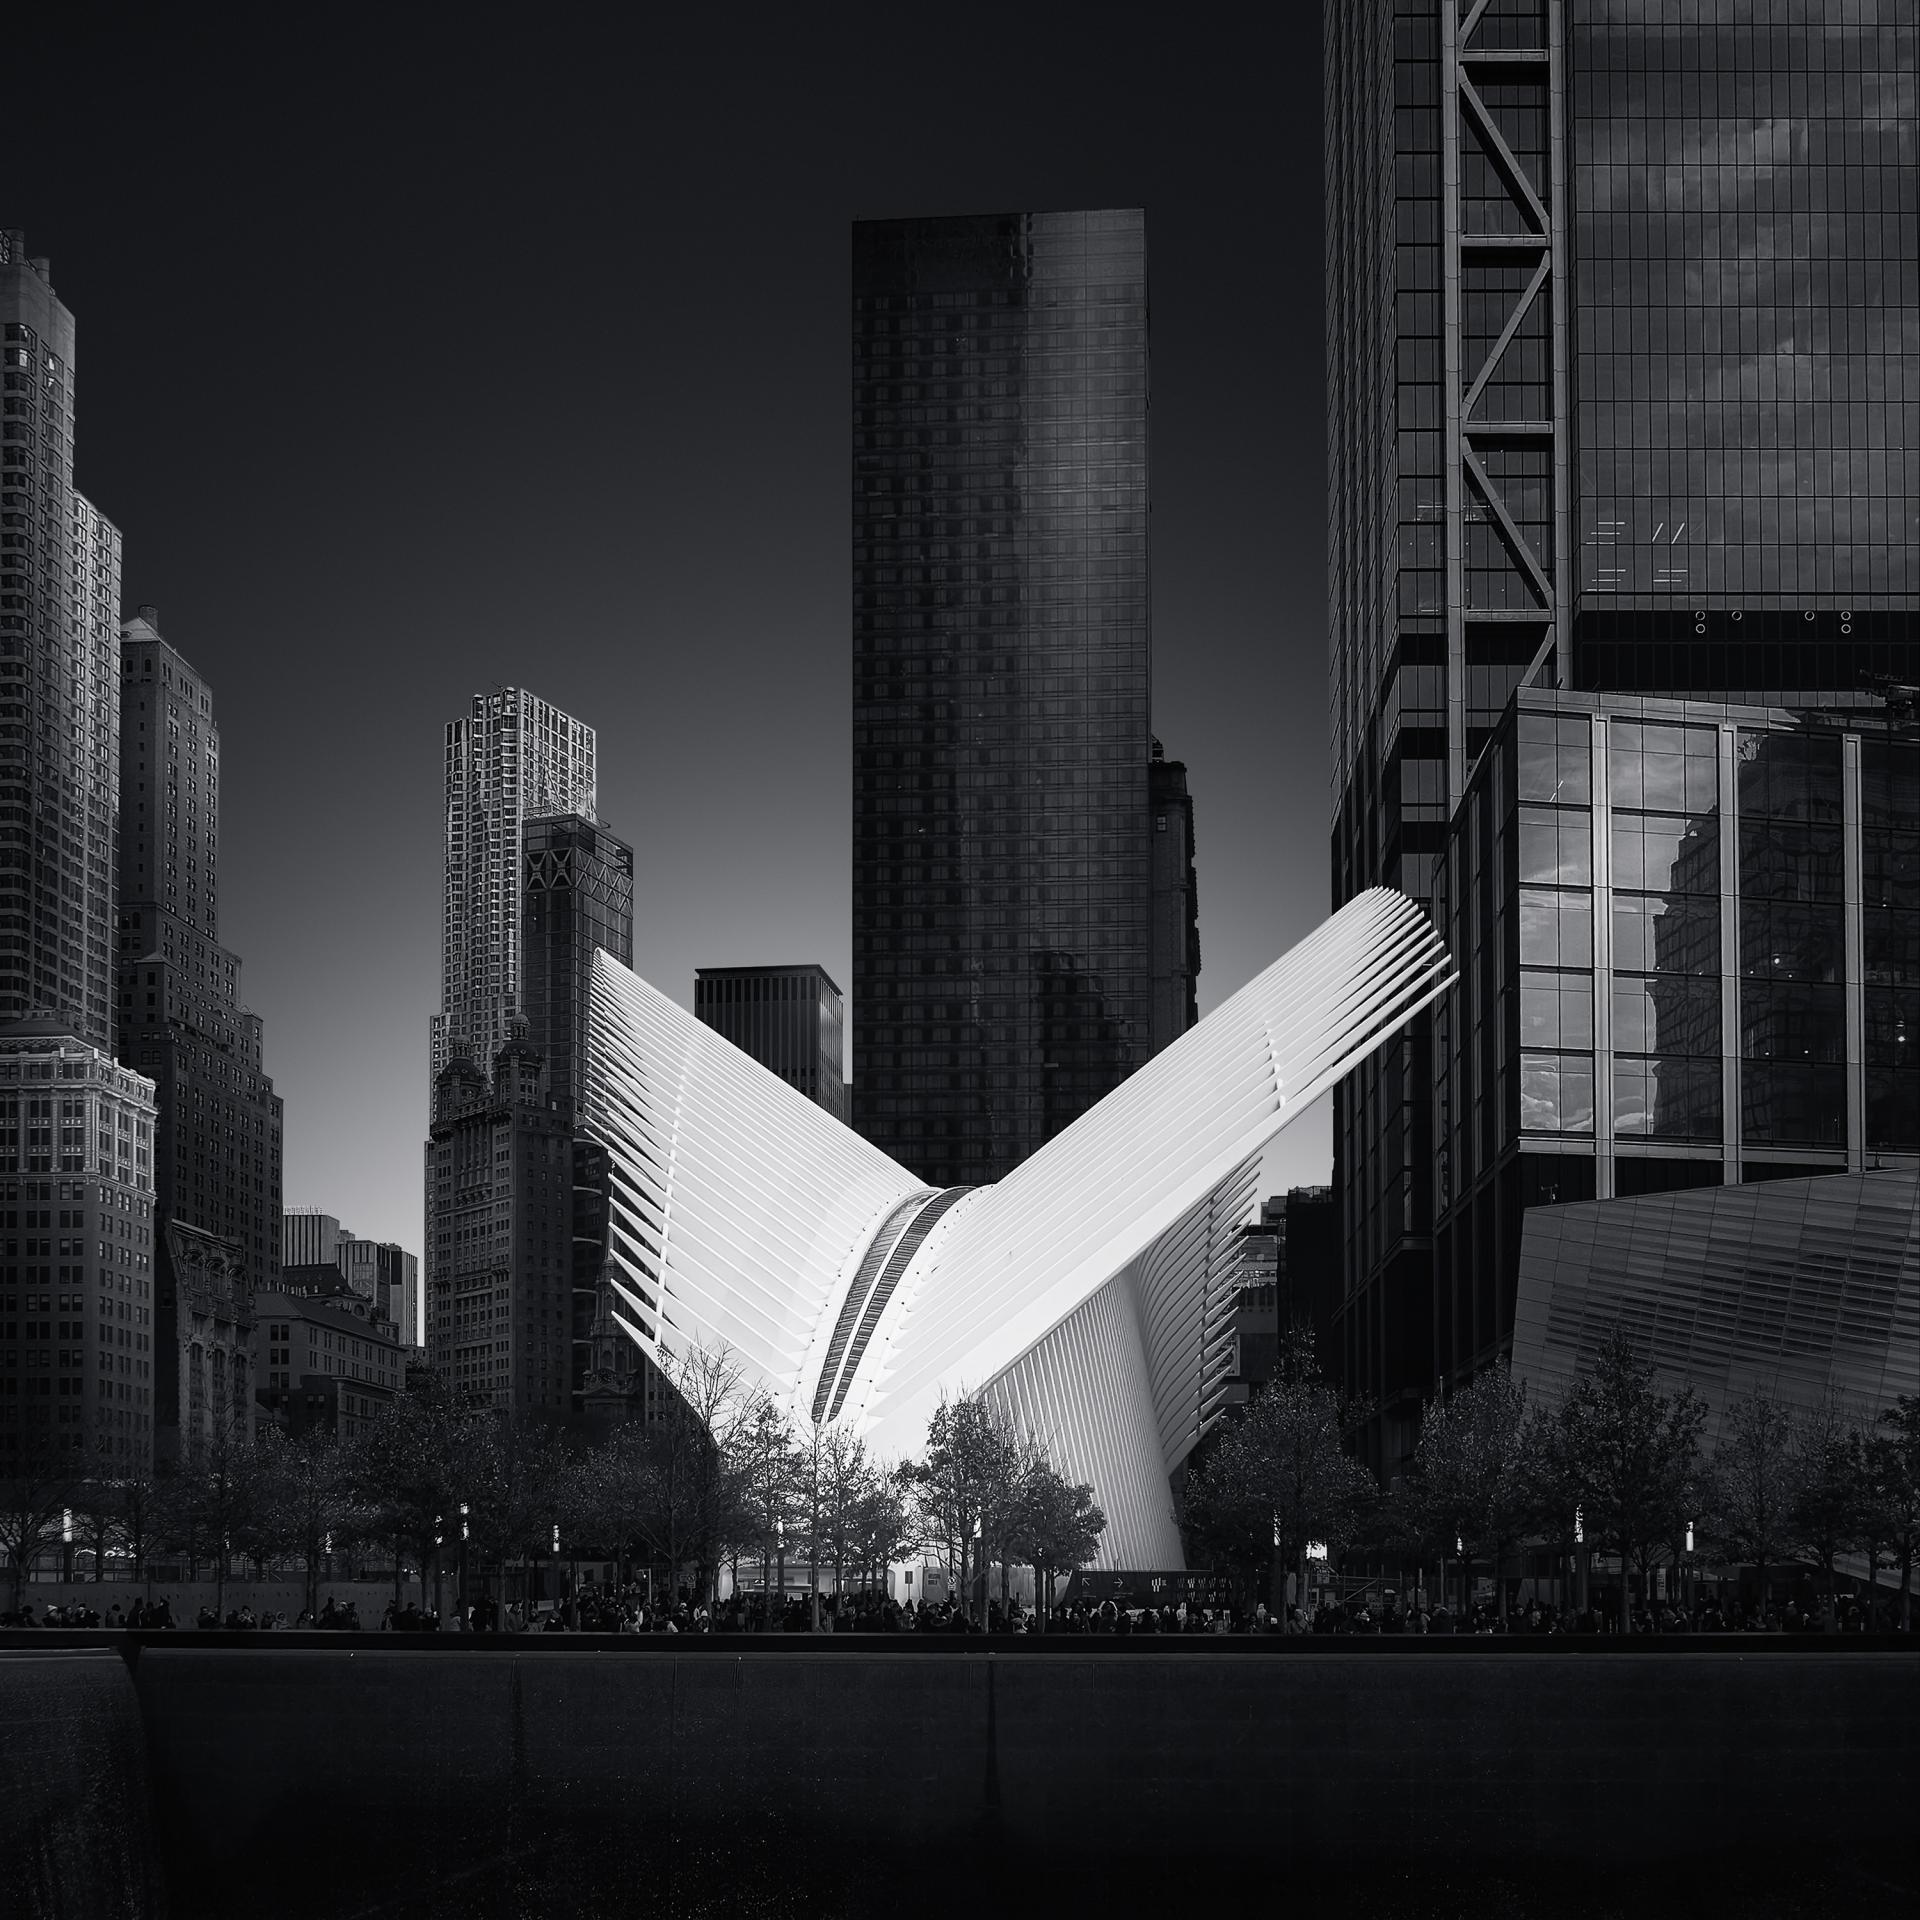 New York Photography Awards Winner - Manhattan wings